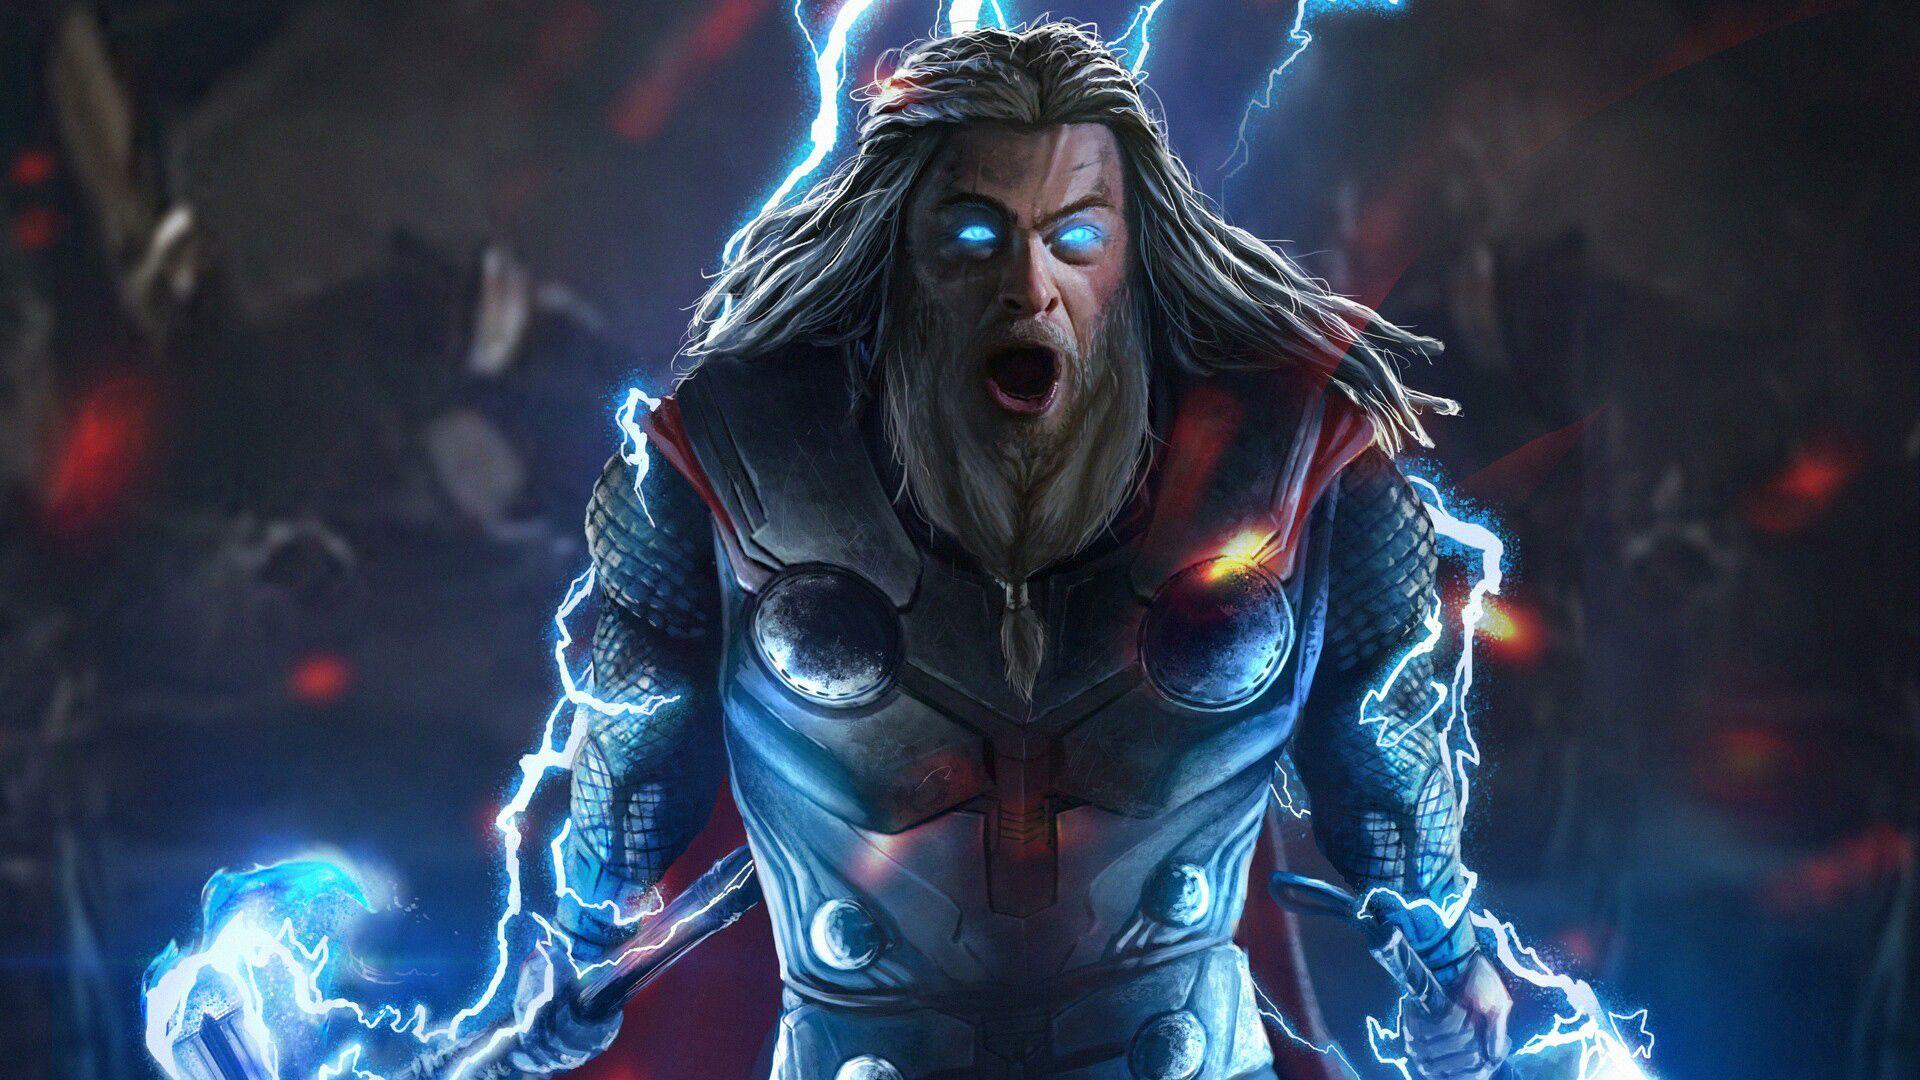 download the new Thor: Ragnarok